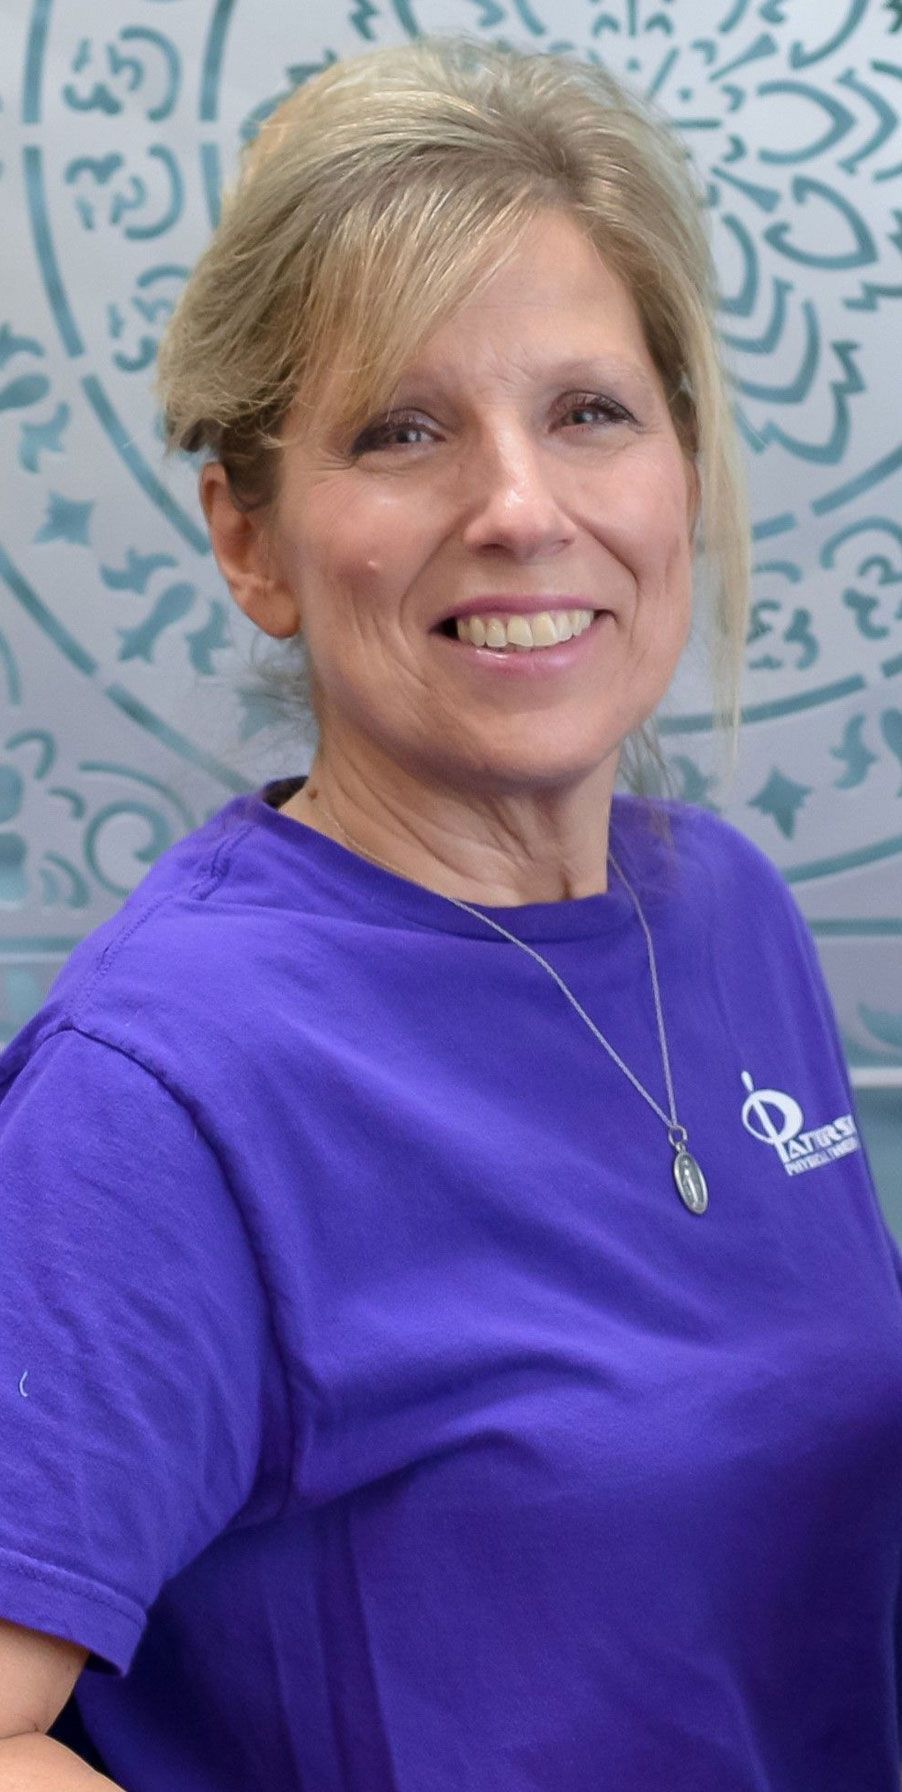 A woman wearing a purple shirt